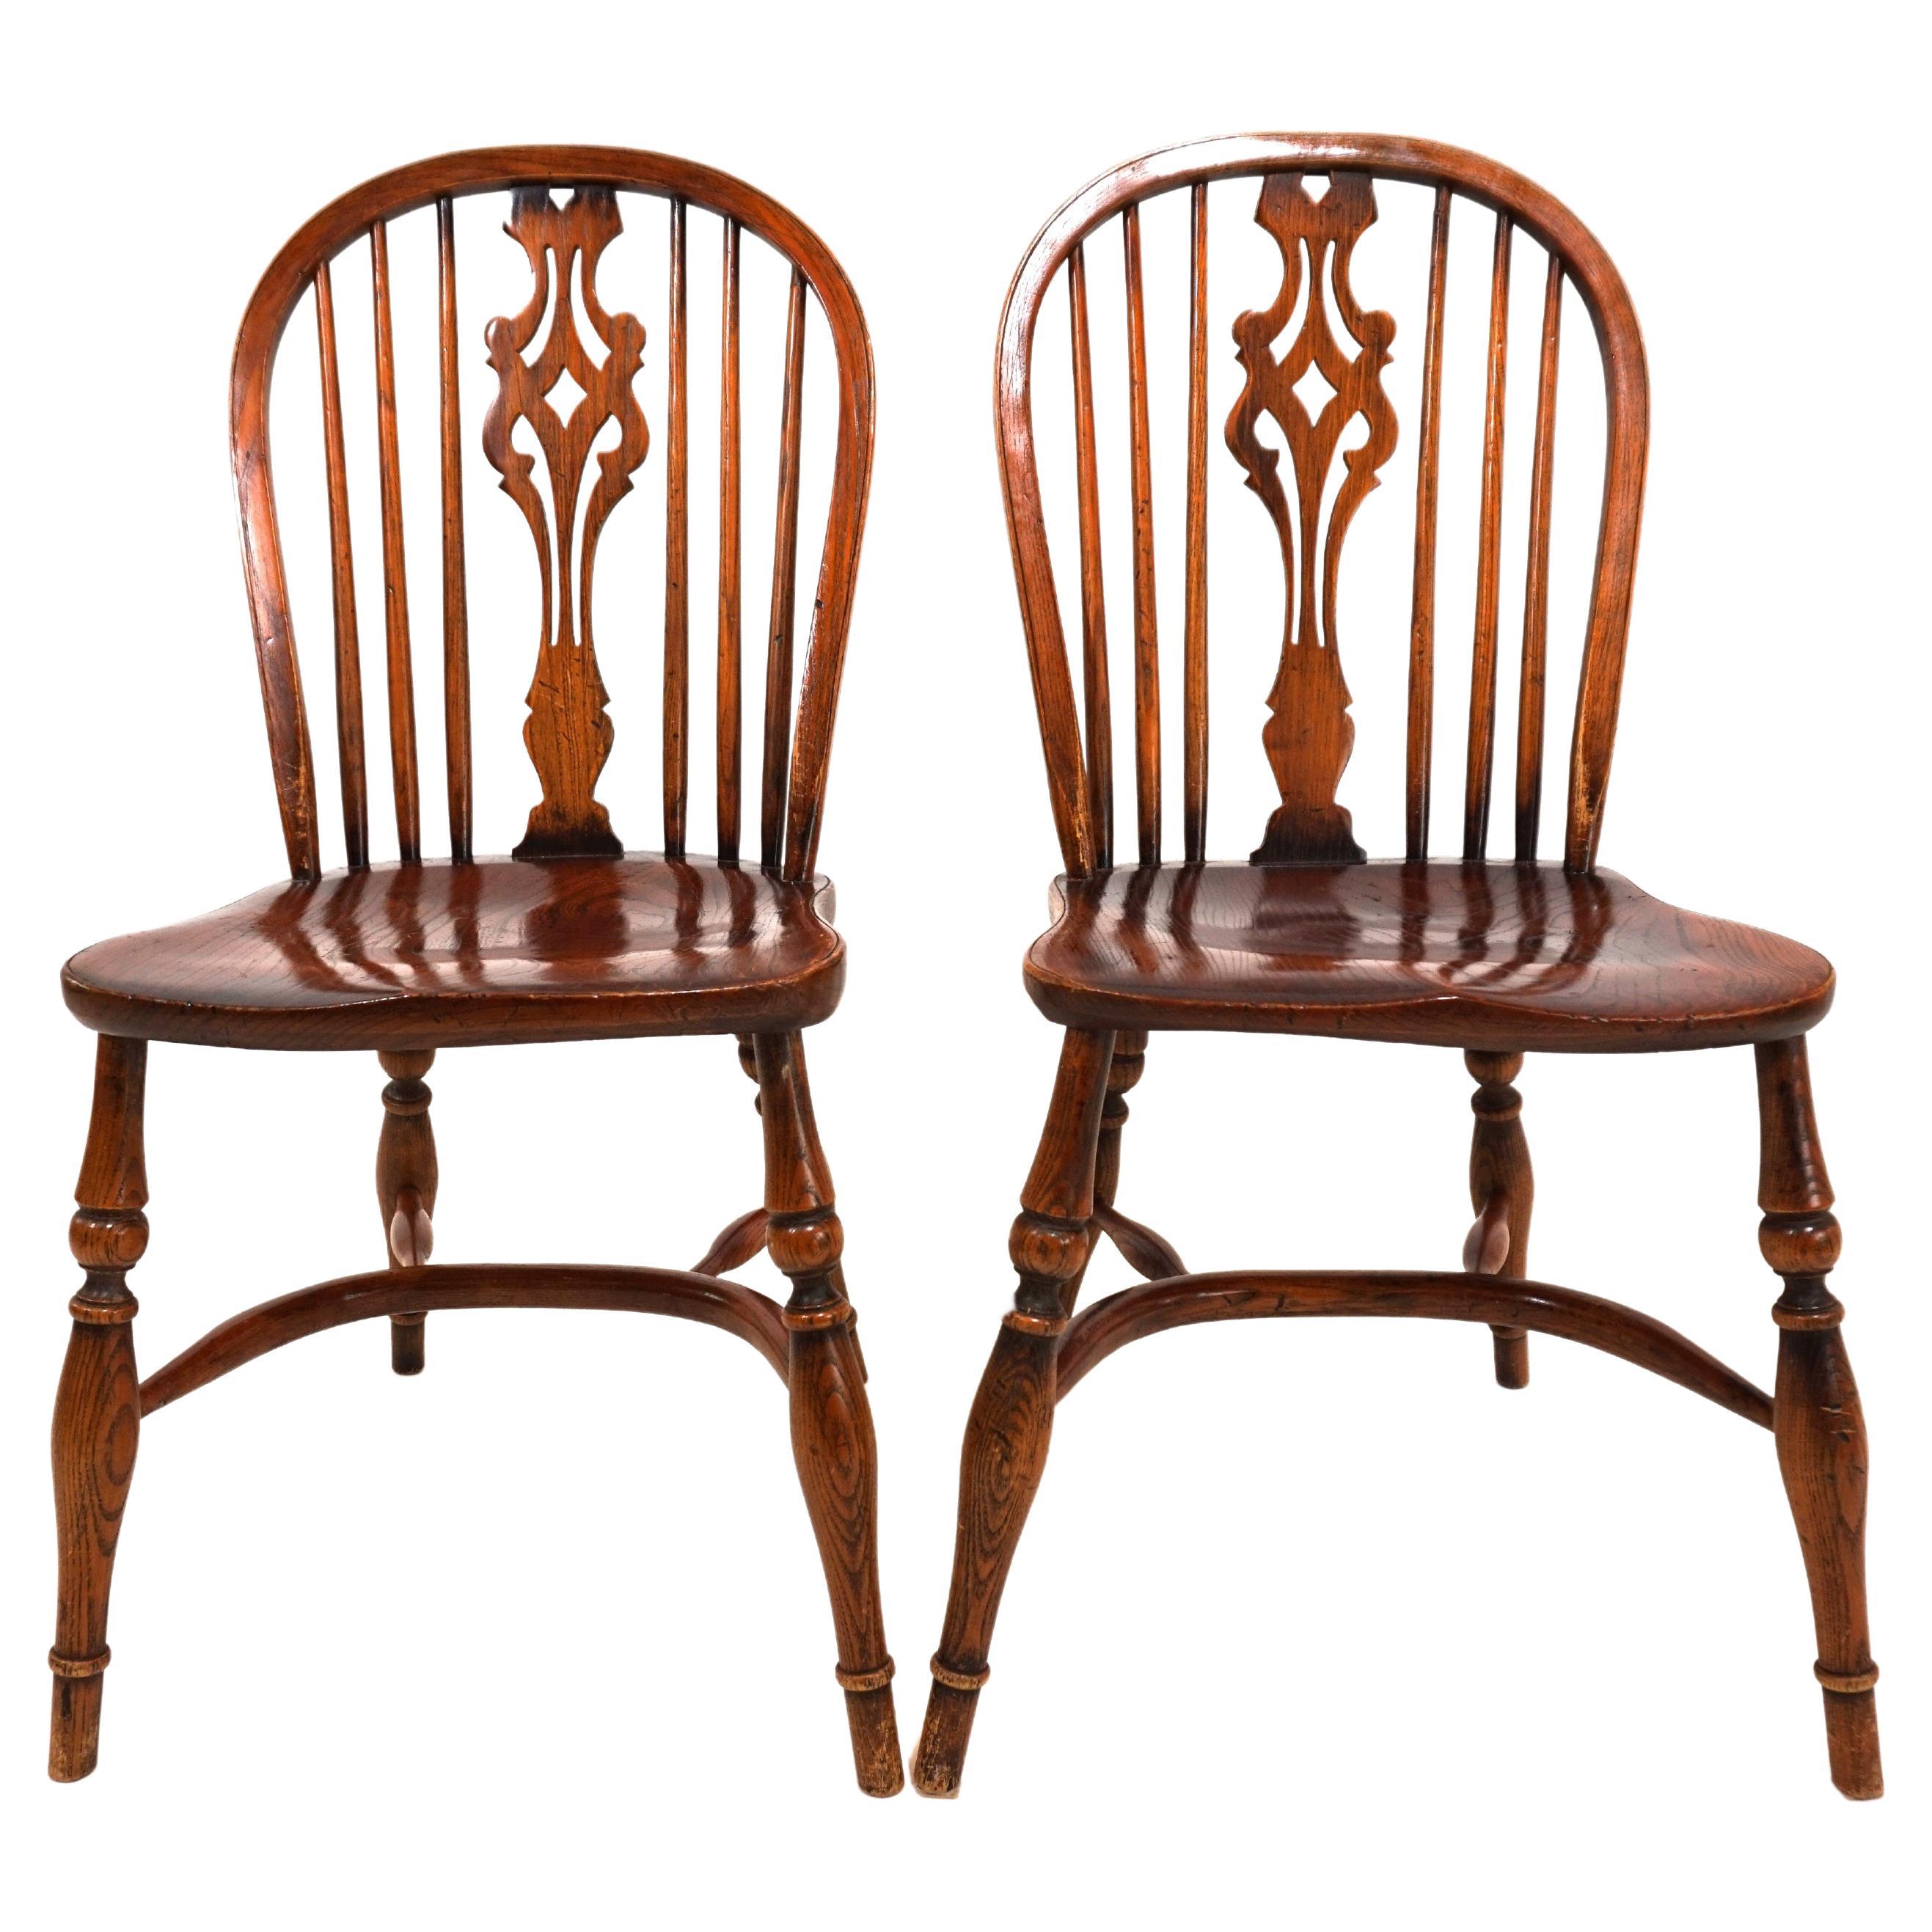 Set of 2 English Windsor chairs